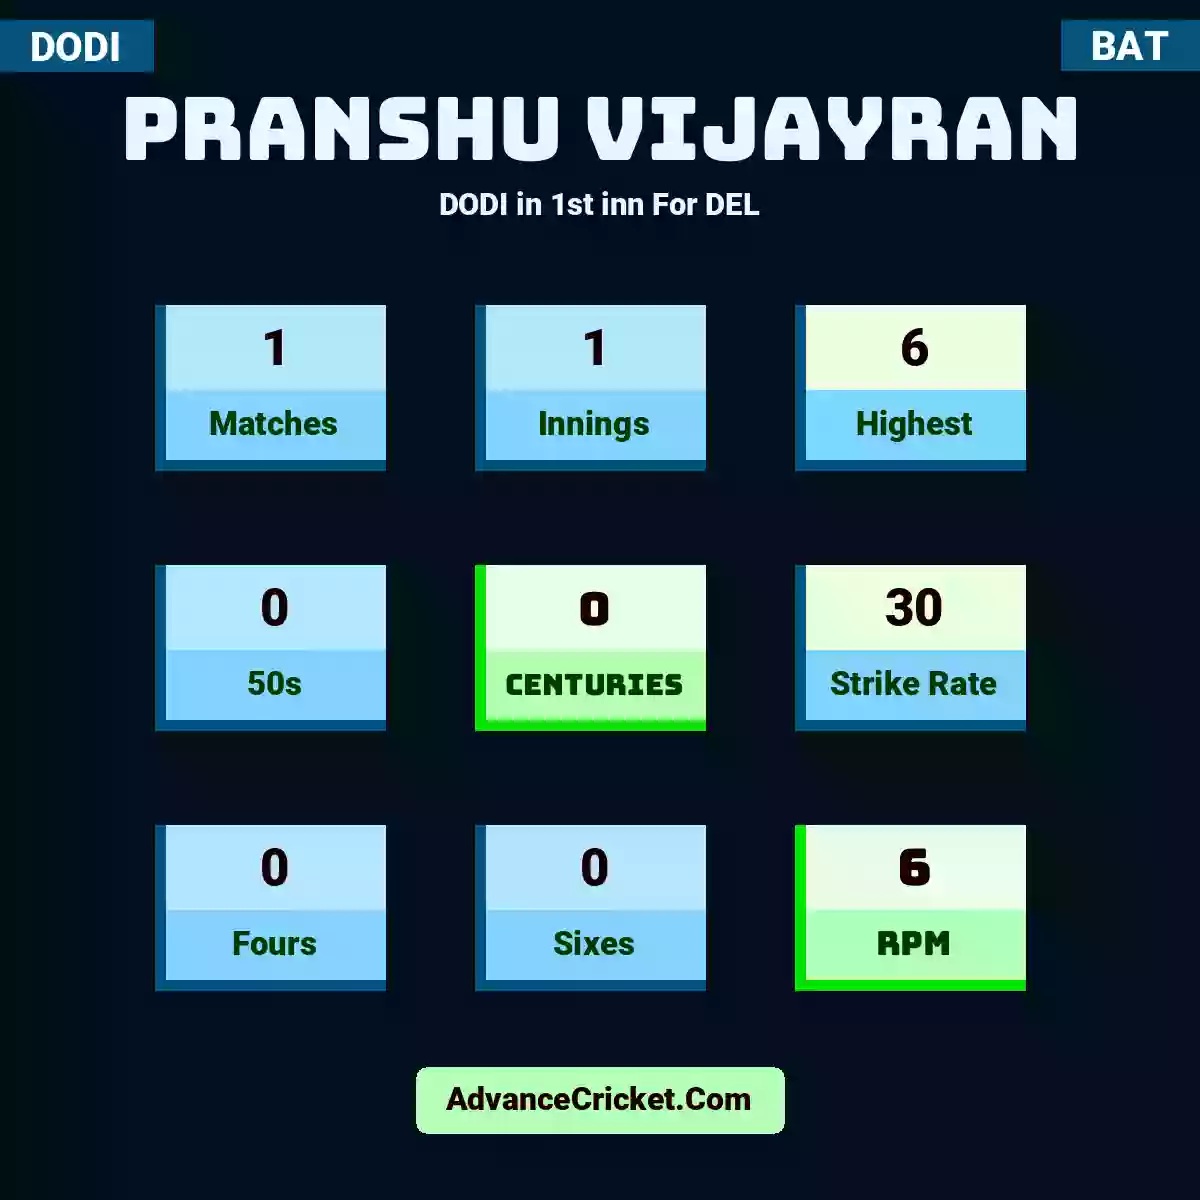 Pranshu Vijayran DODI  in 1st inn For DEL, Pranshu Vijayran played 1 matches, scored 6 runs as highest, 0 half-centuries, and 0 centuries, with a strike rate of 30. P.Vijayran hit 0 fours and 0 sixes, with an RPM of 6.